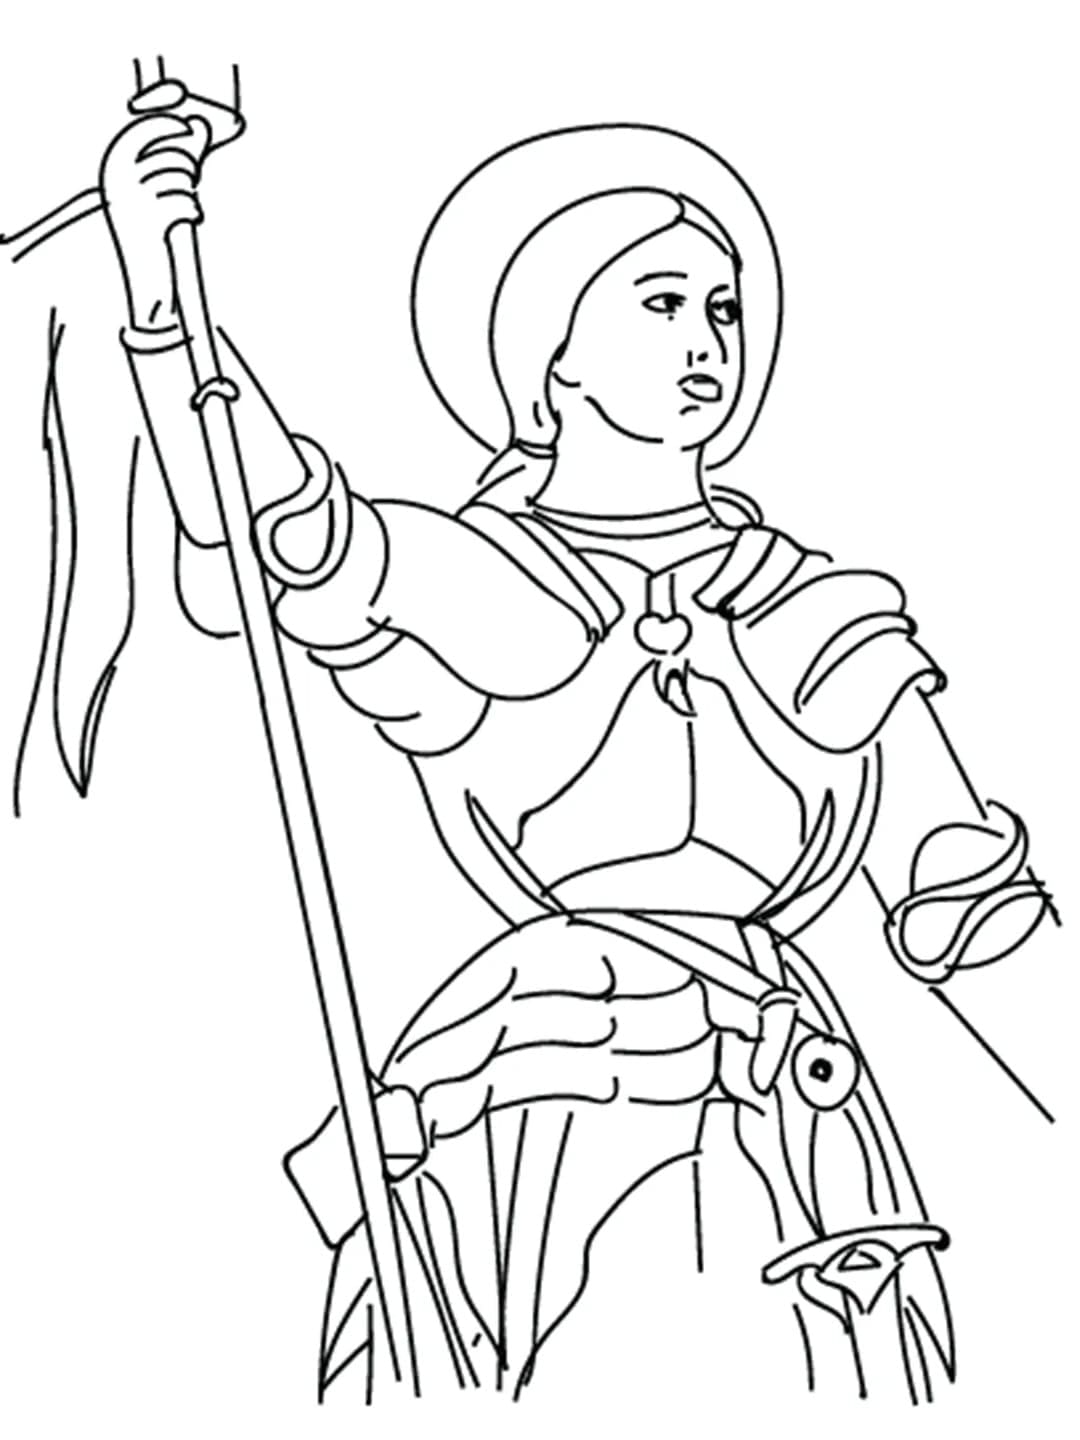 Jeanne d’Arc coloring page